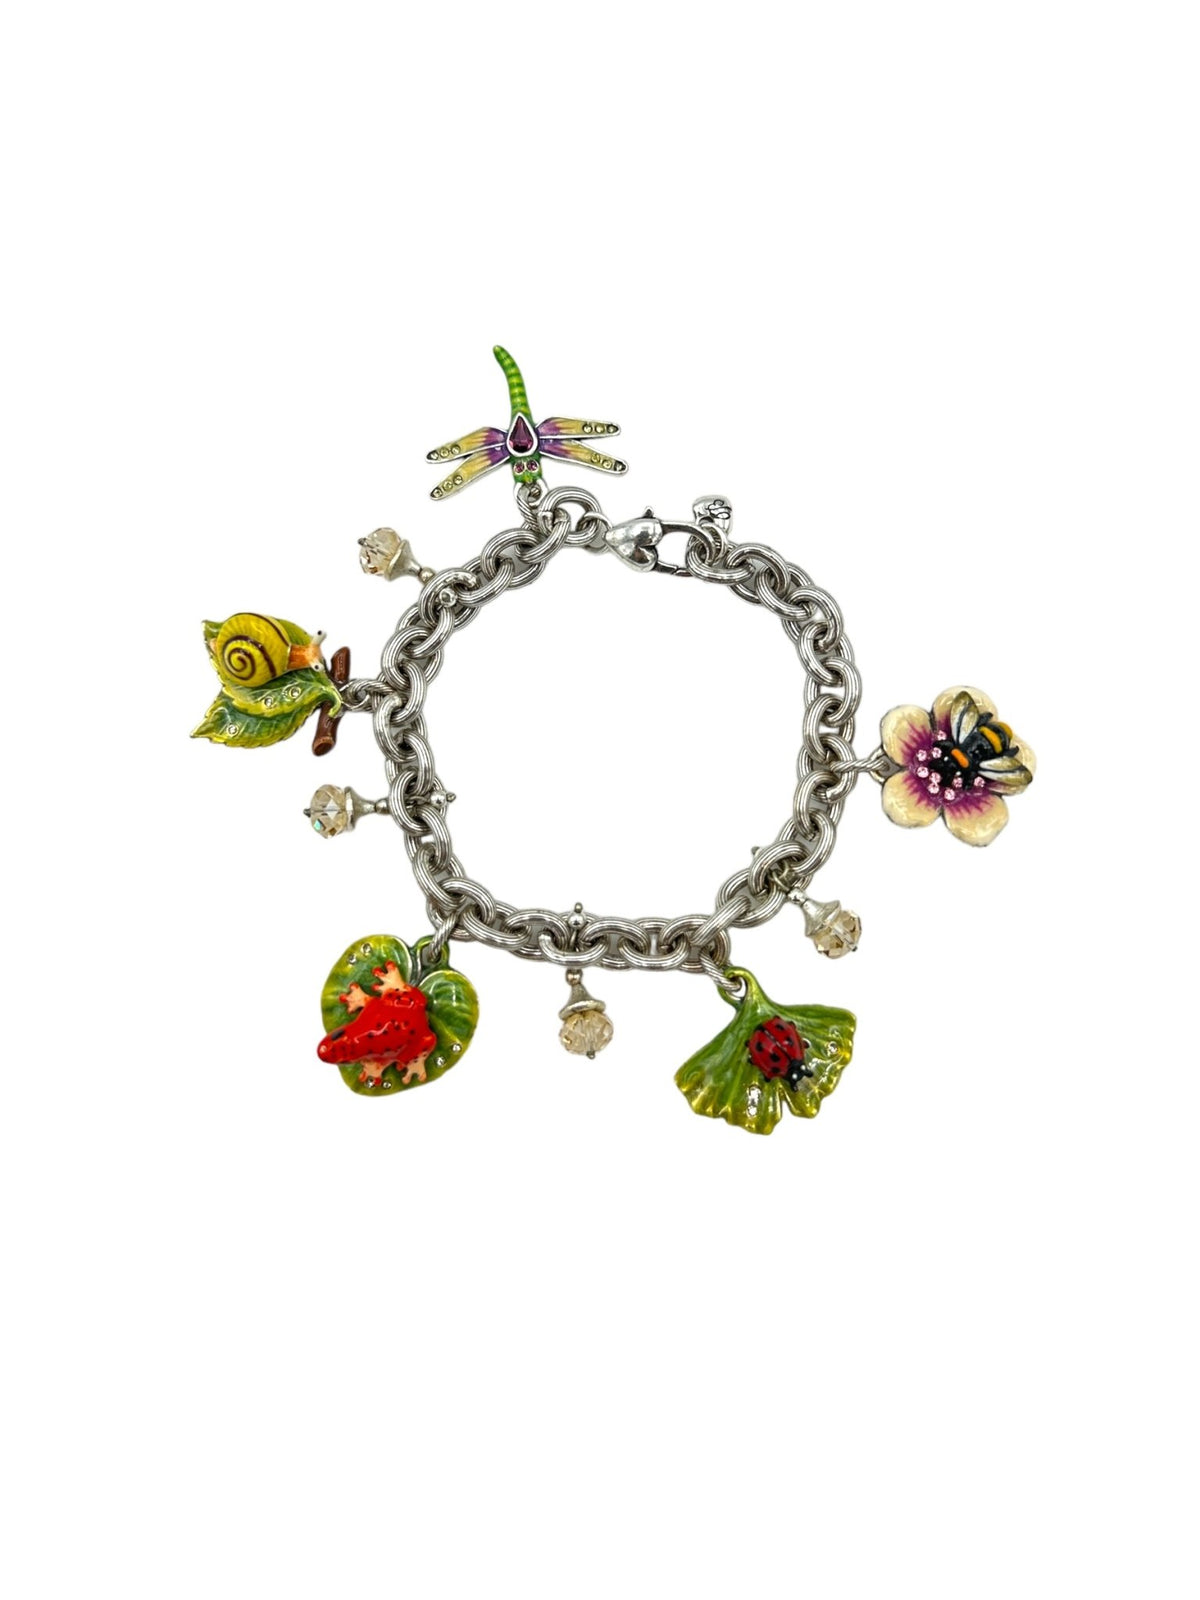 Brighton Retired Jewelry Enamel Floral Pond 'Marvels' Silver Charm Bracelet - 24 Wishes Vintage Jewelry